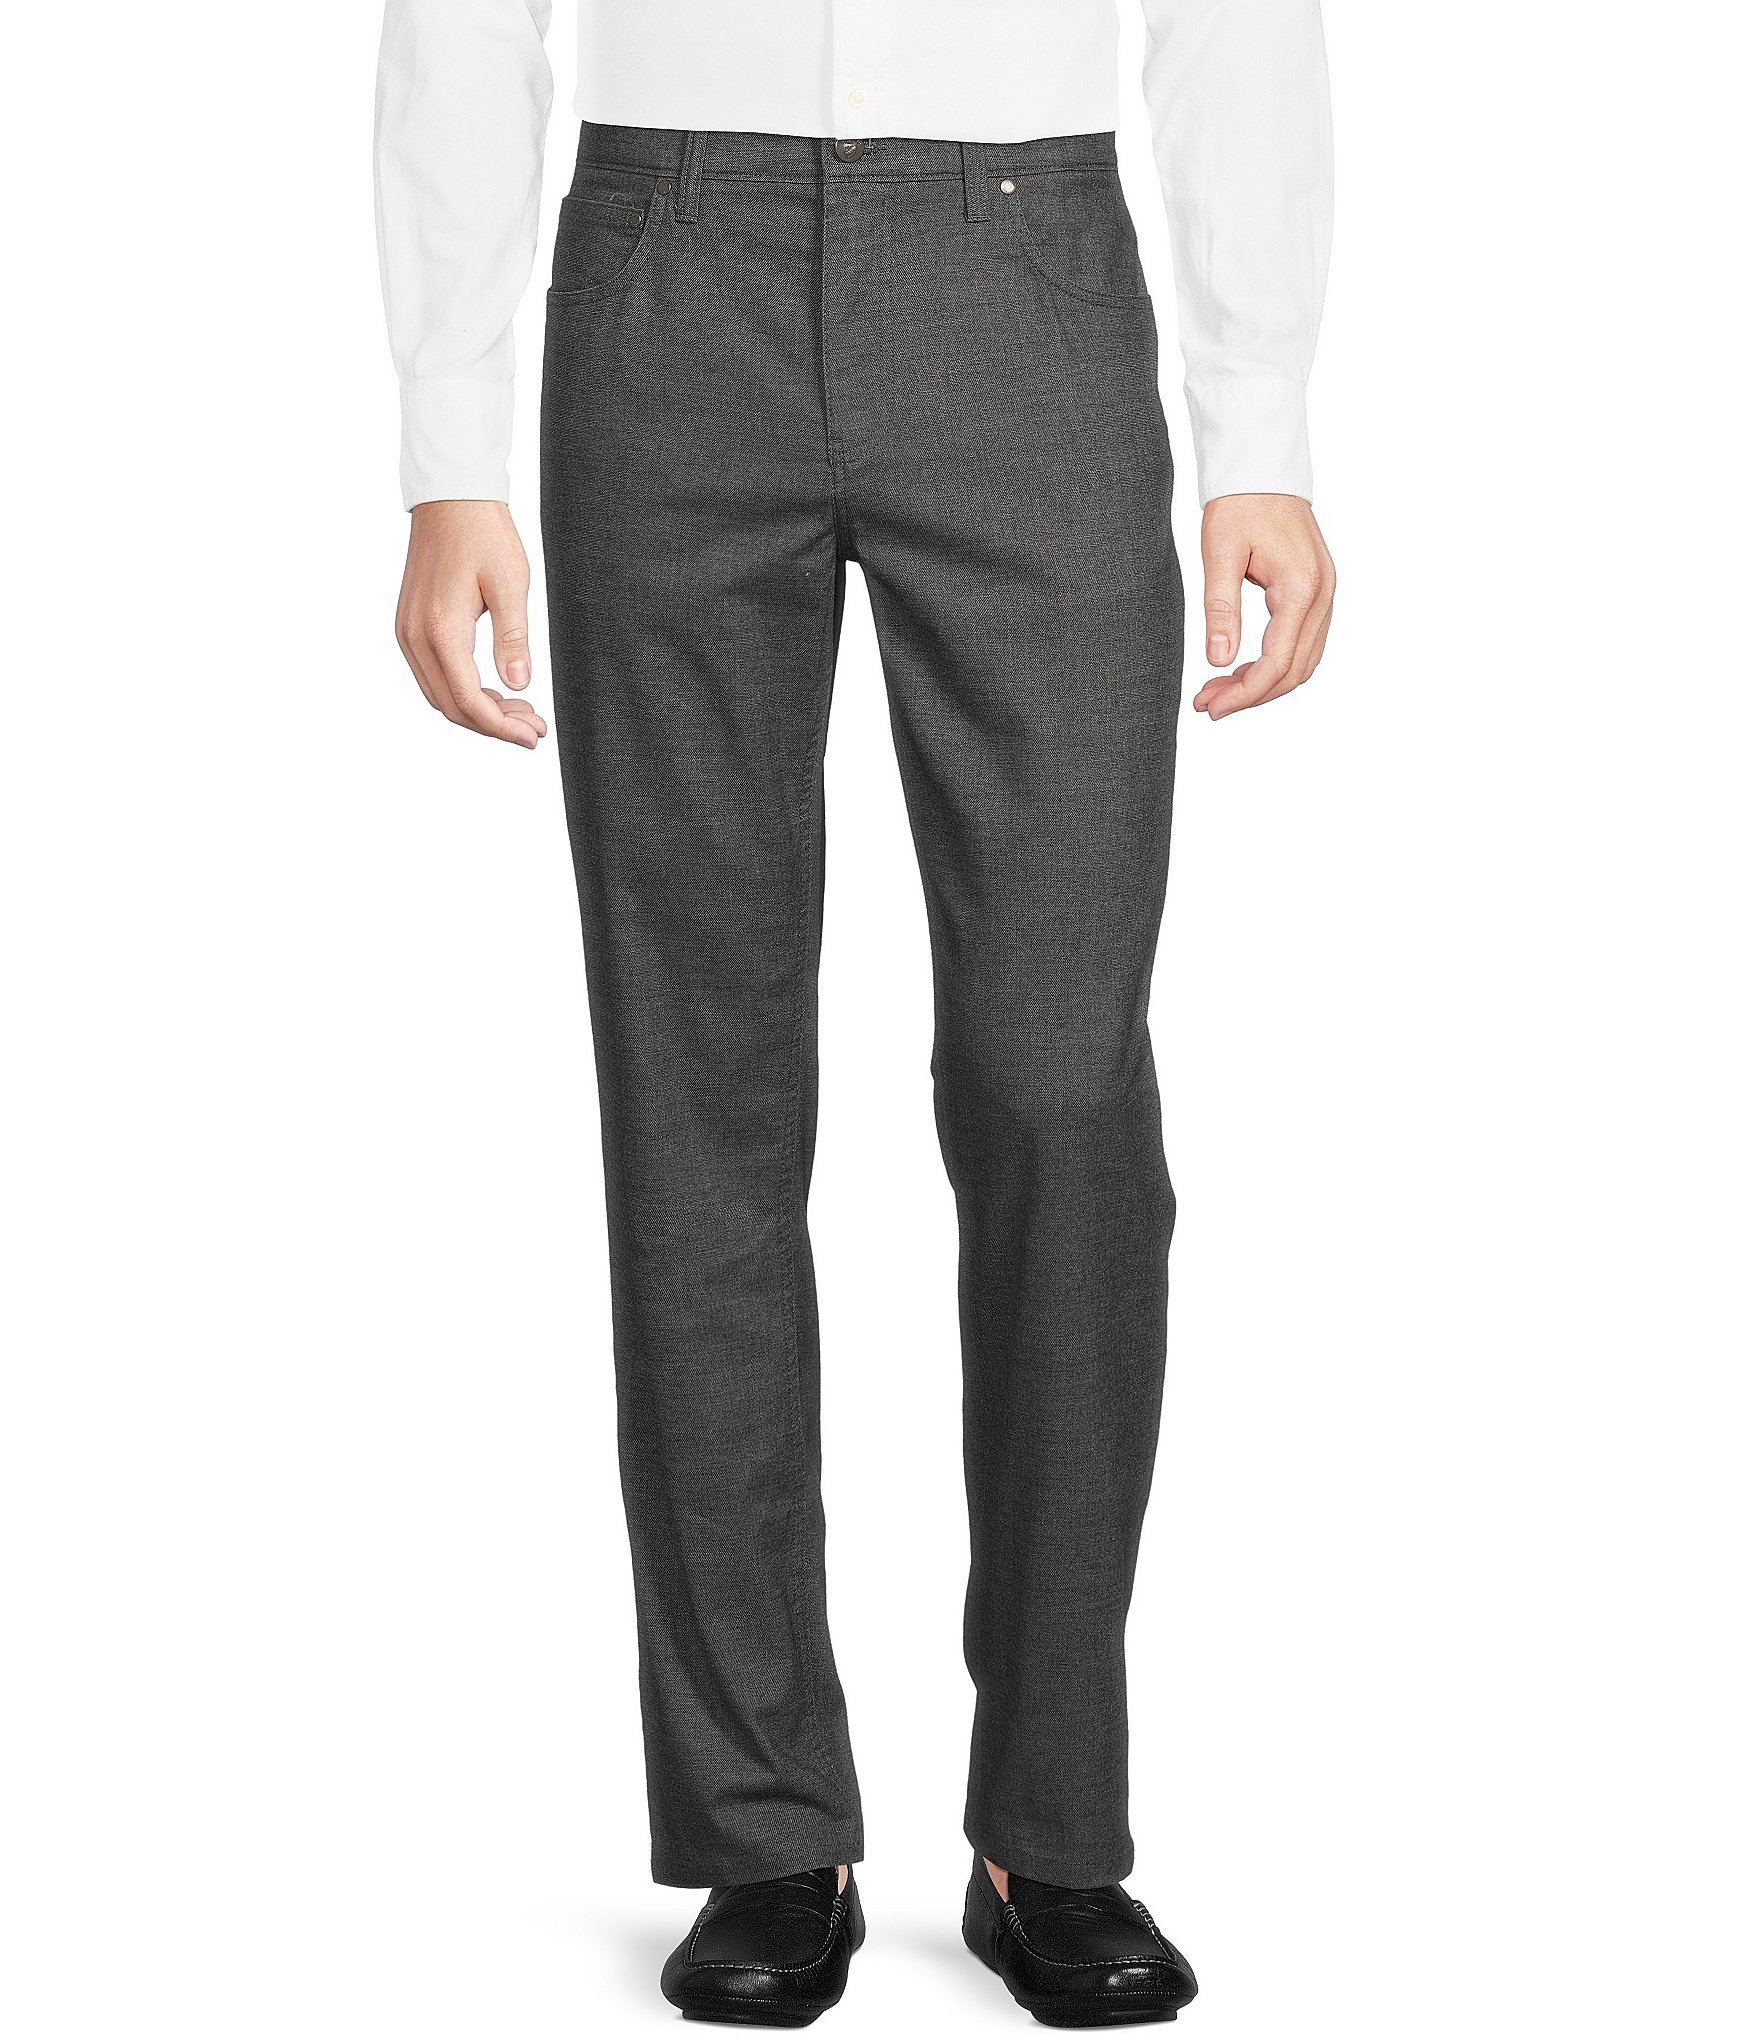 Cremieux Blue Label Tribeca Collection Hudson 5-Pocket Textured Pants